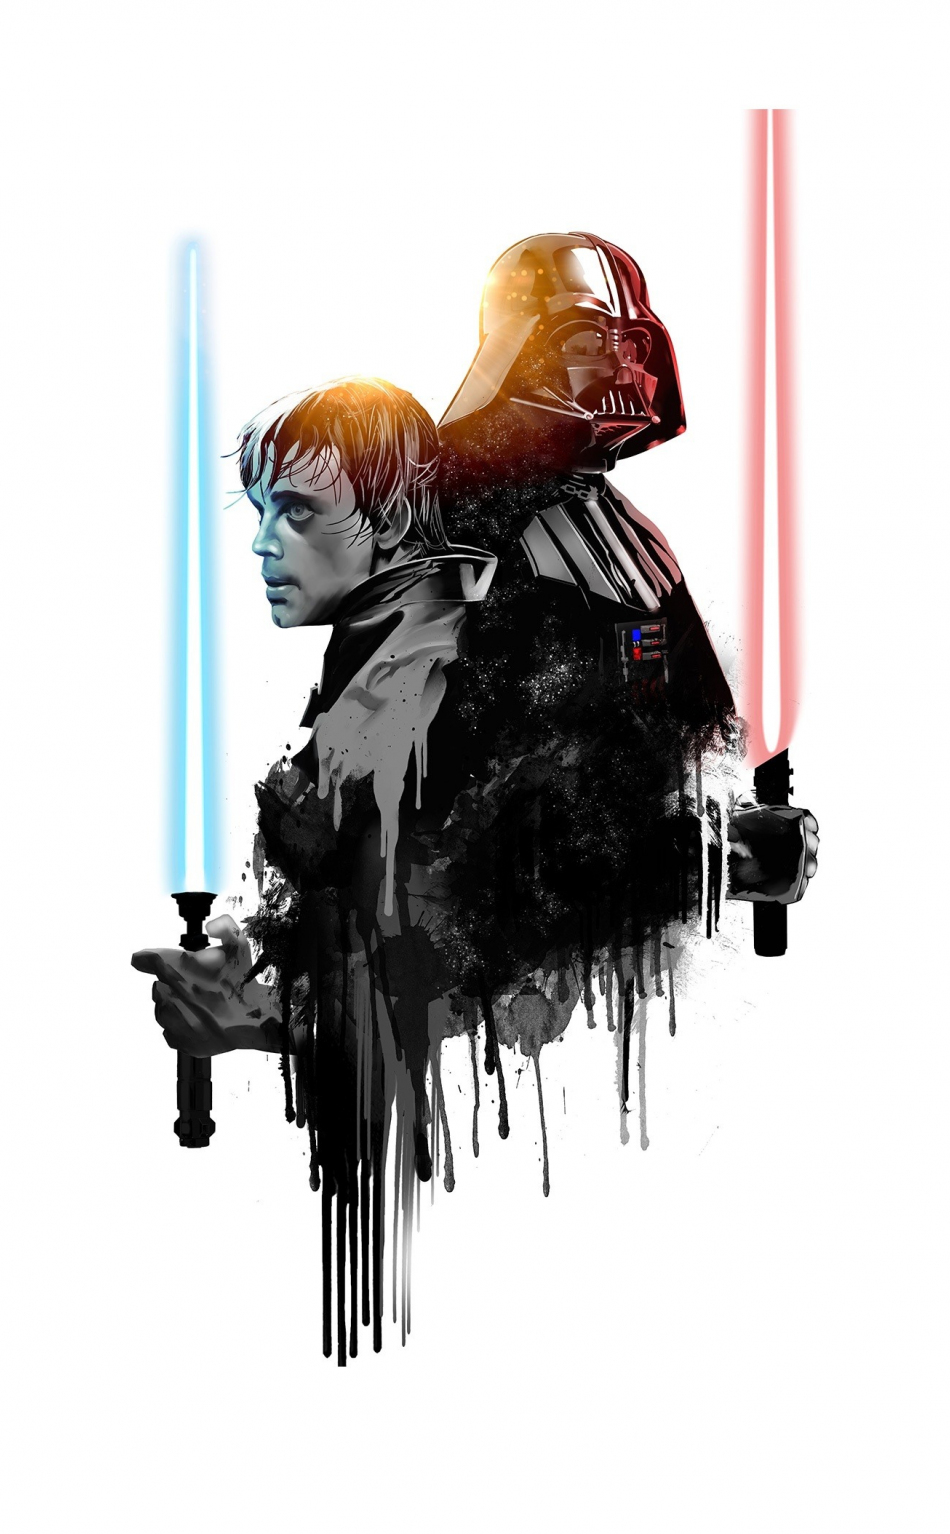 Download Darth Vader Luke Skywalker Star Wars Minimal 950x1534 Wallpaper Iphone 950x1534 Hd Image Background 3363